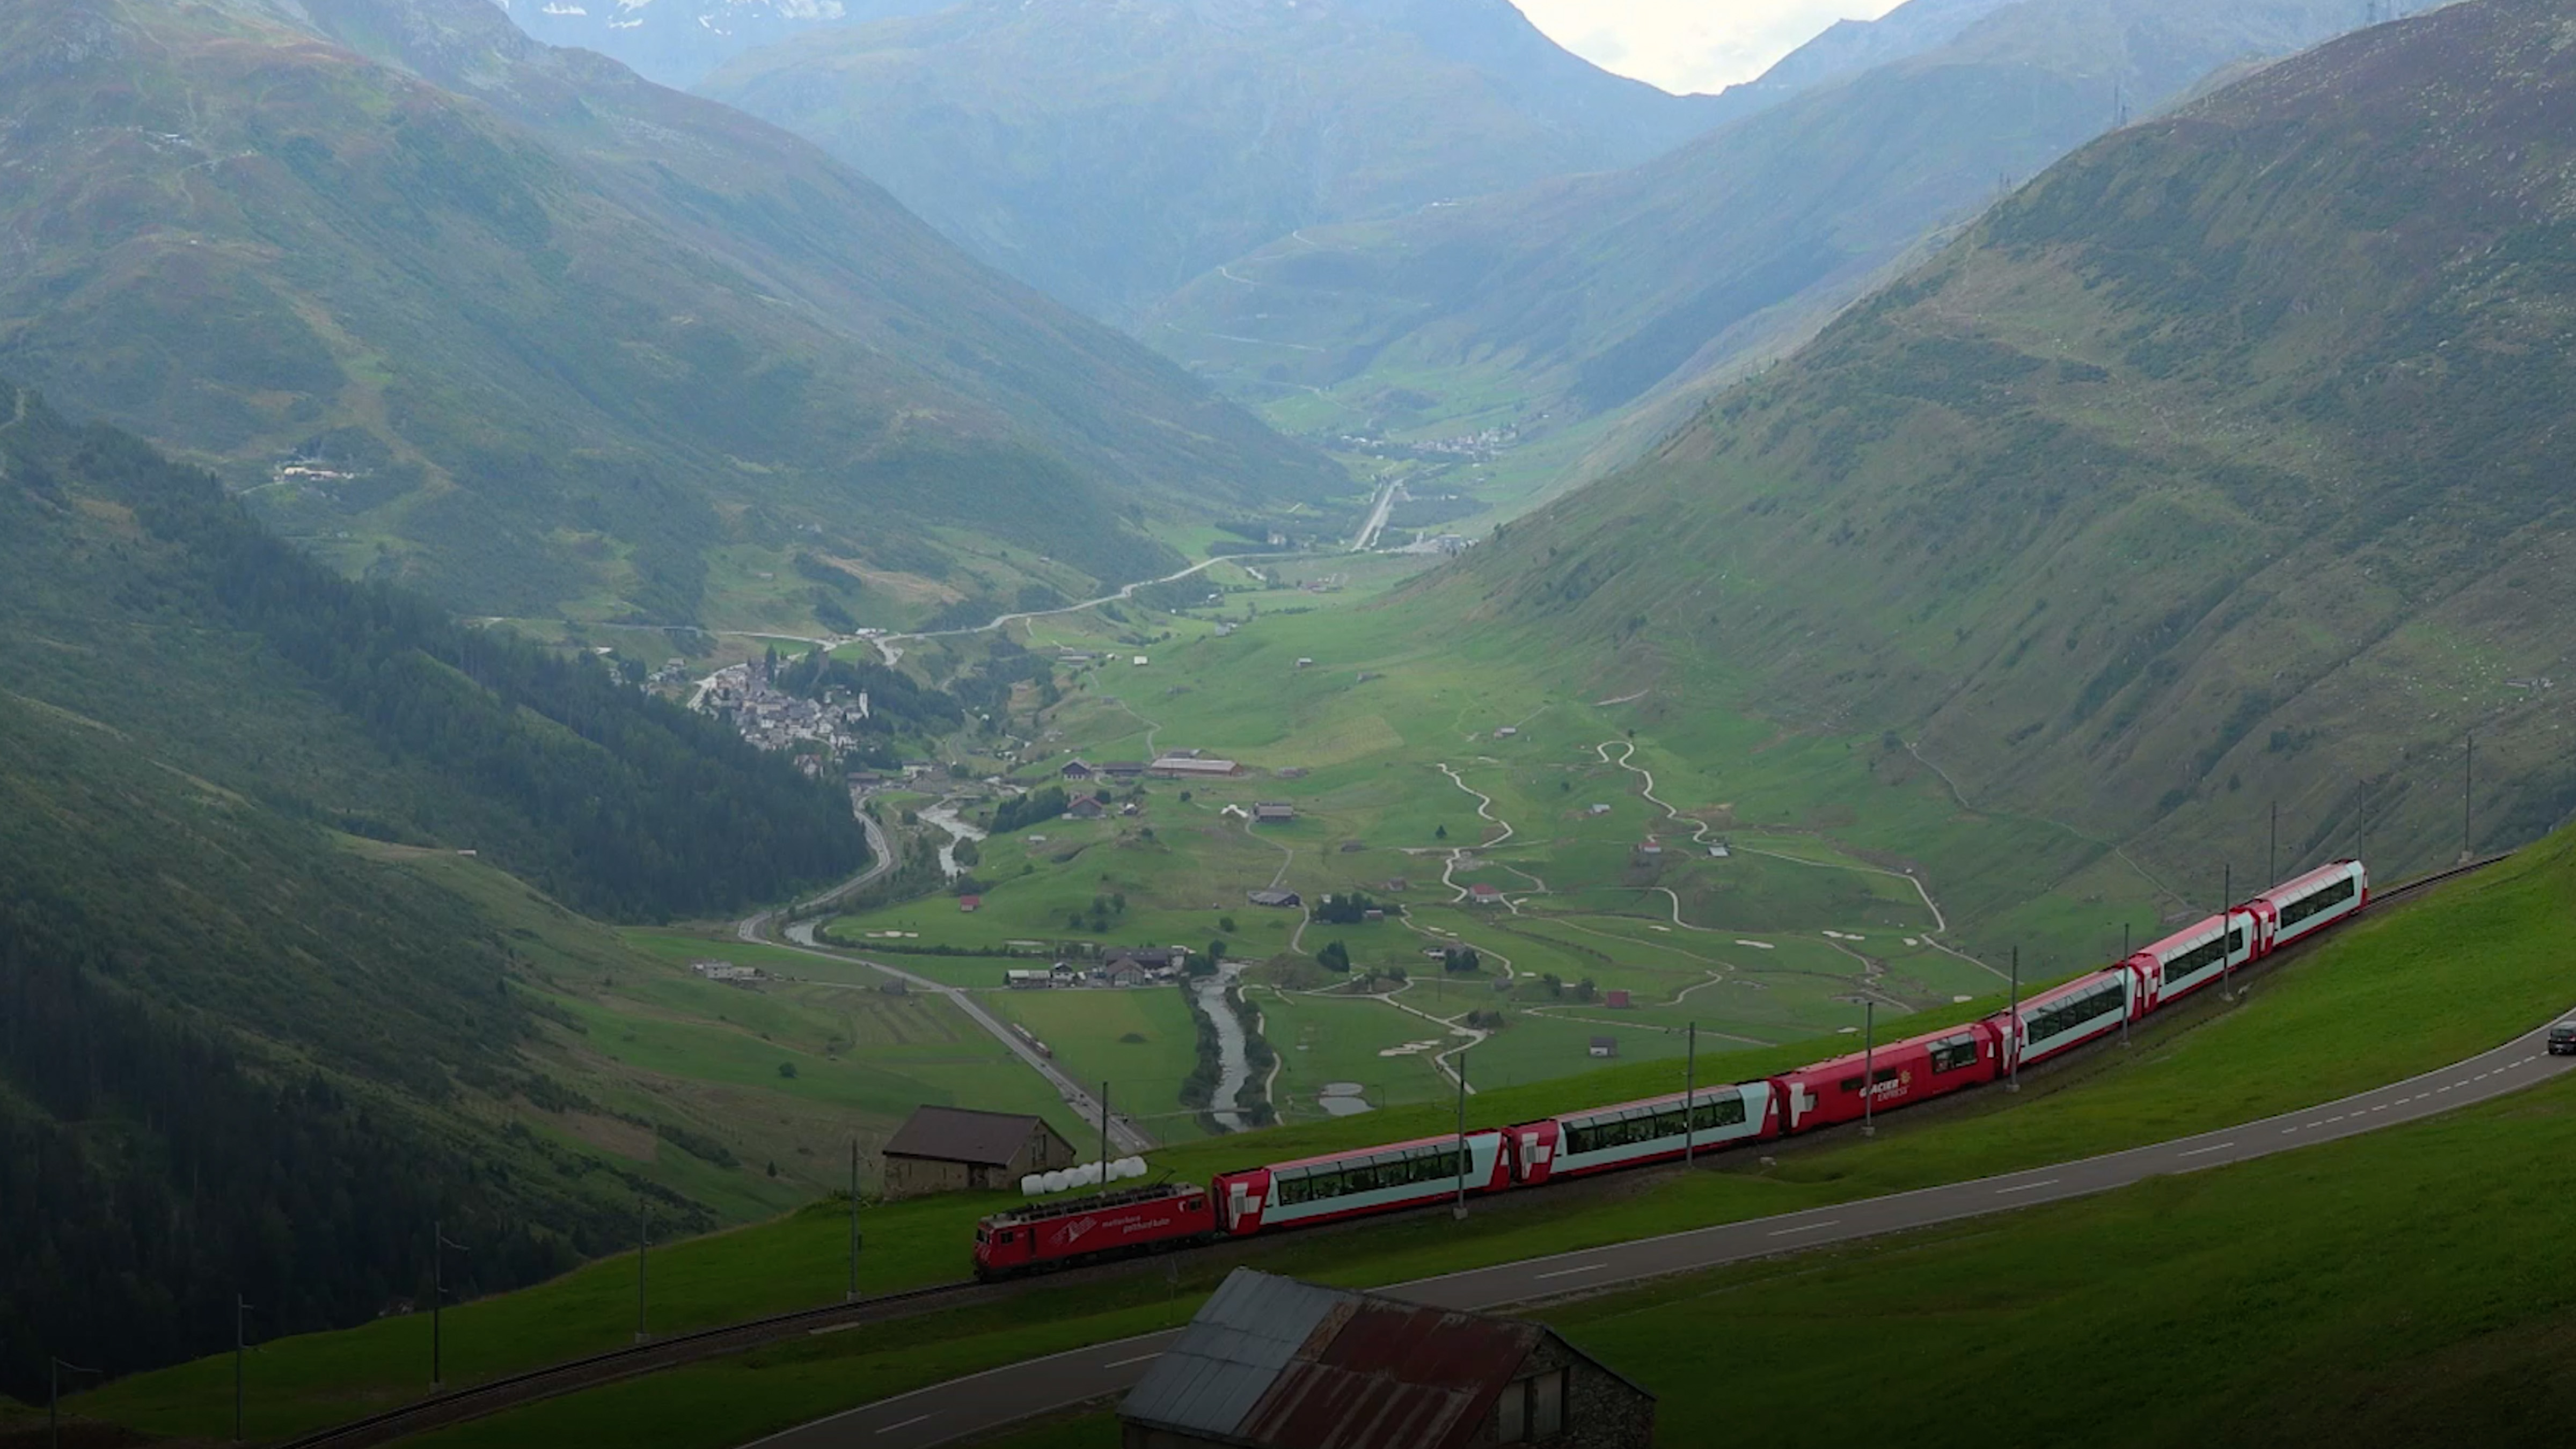 Inside the upcoming Orient Express La Dolce Vita train - KVIA